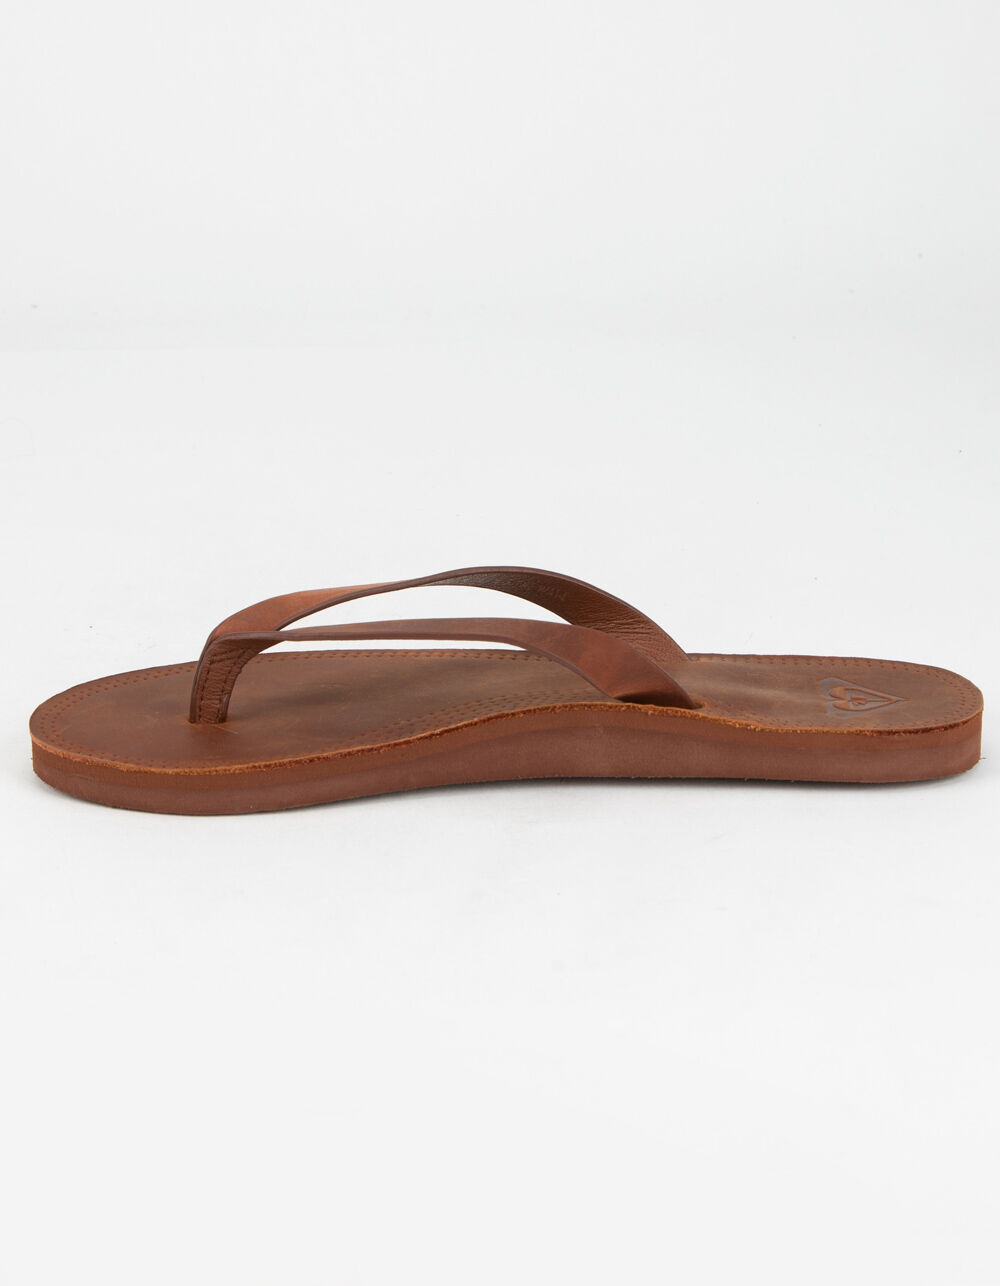 ROXY Brinn Womens Leather Sandals - CHOCOLATE | Tillys